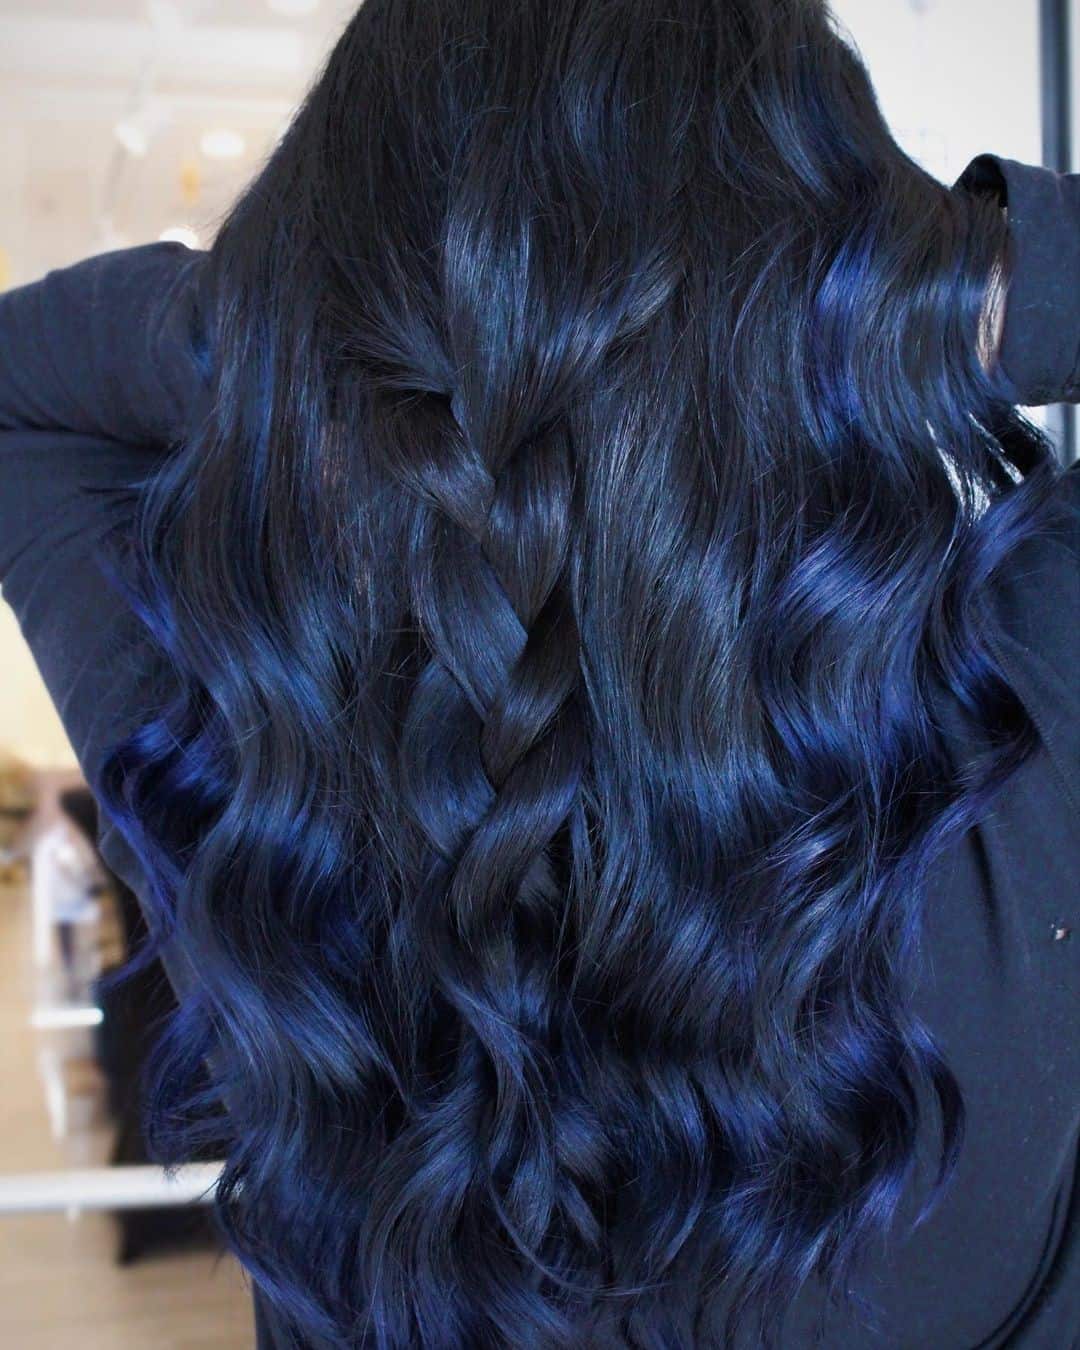 Wavy & Voluminous Black & Blue Hair